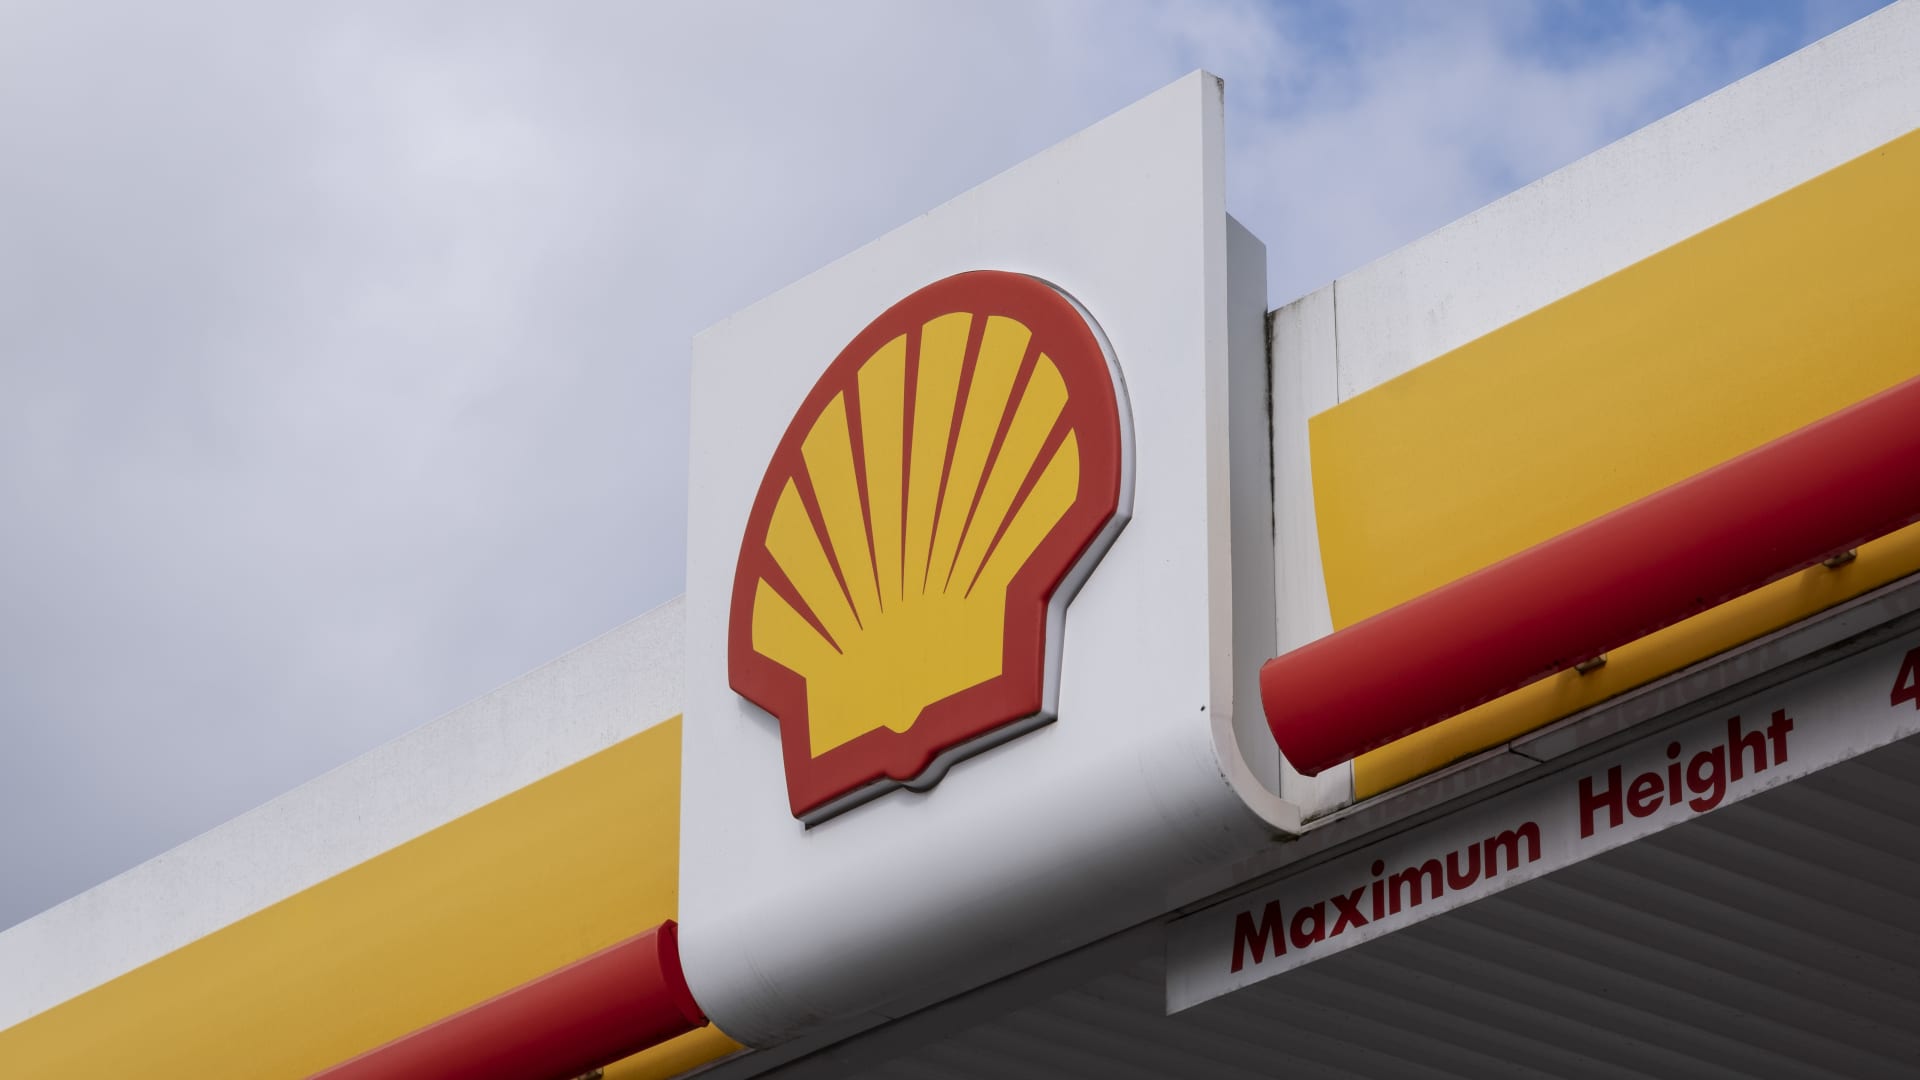 Shell petrol station logo on Sept. 29, 2021 in Birmingham, United Kingdom.